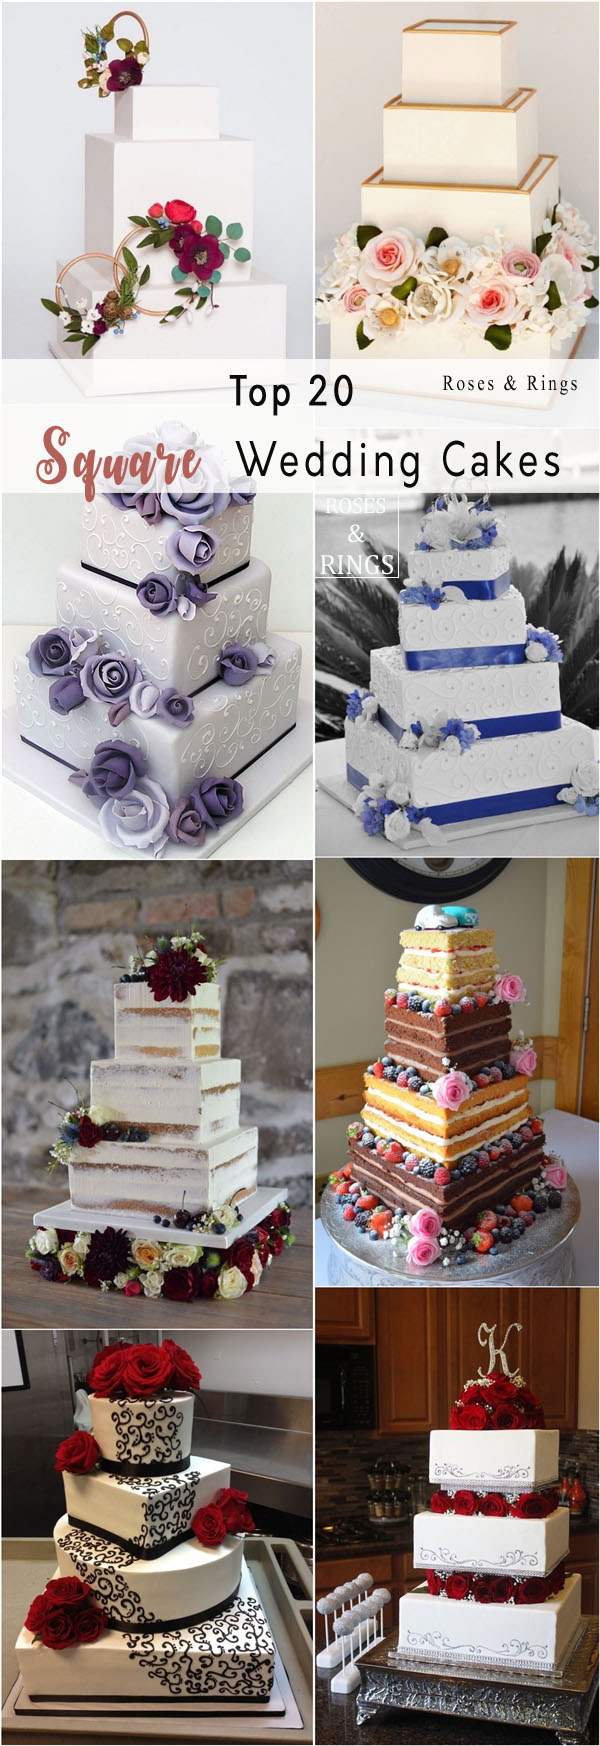 classic square wedding cake ideas